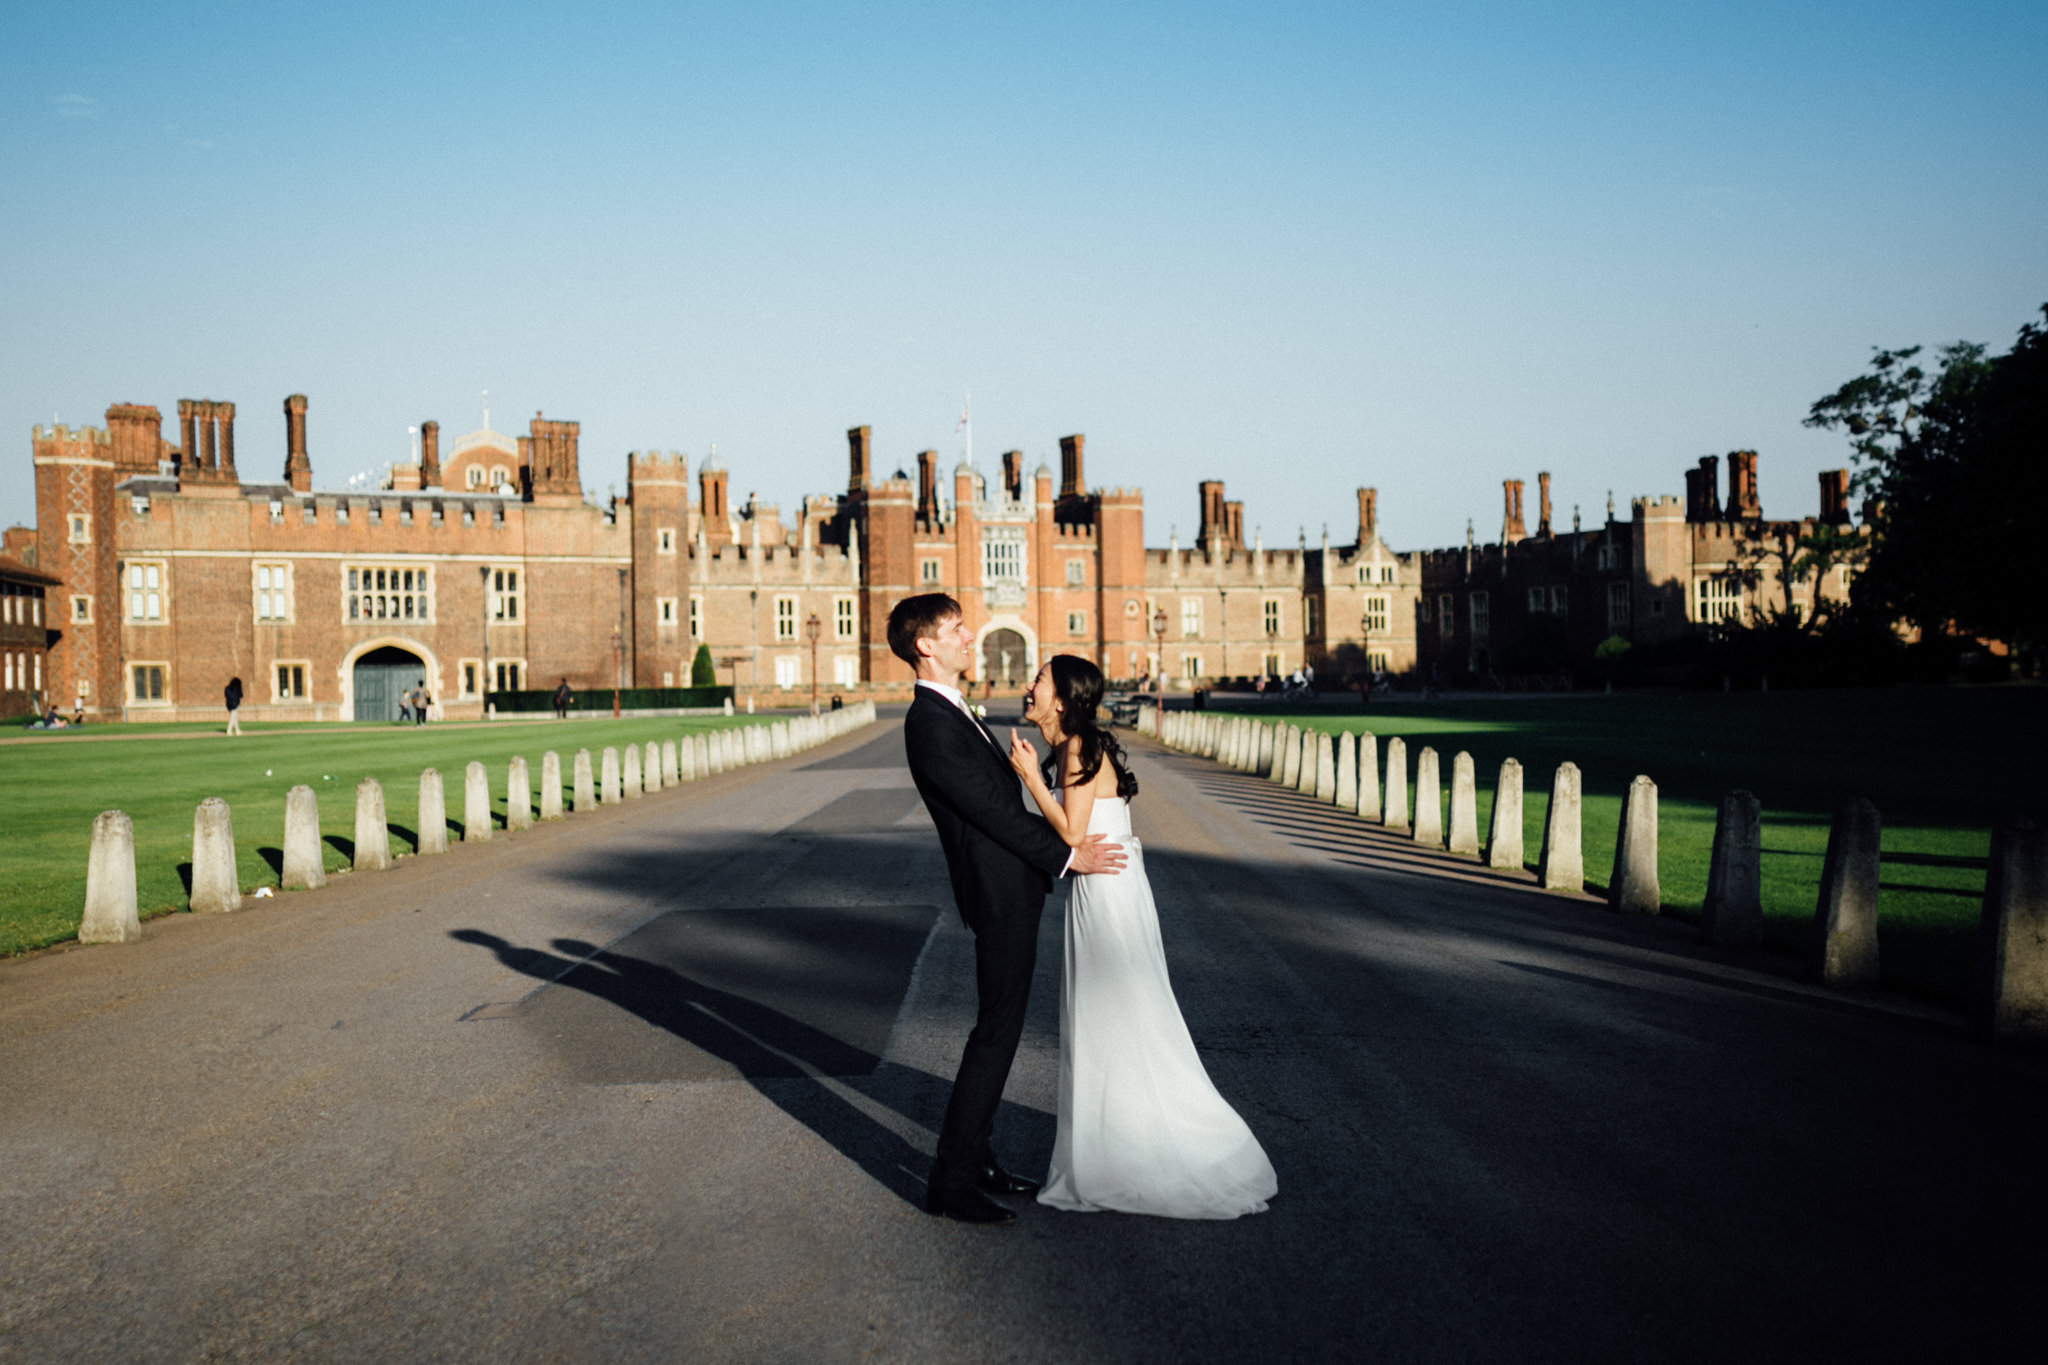 documentary wedding photography london and brighton speeches hampton court palace